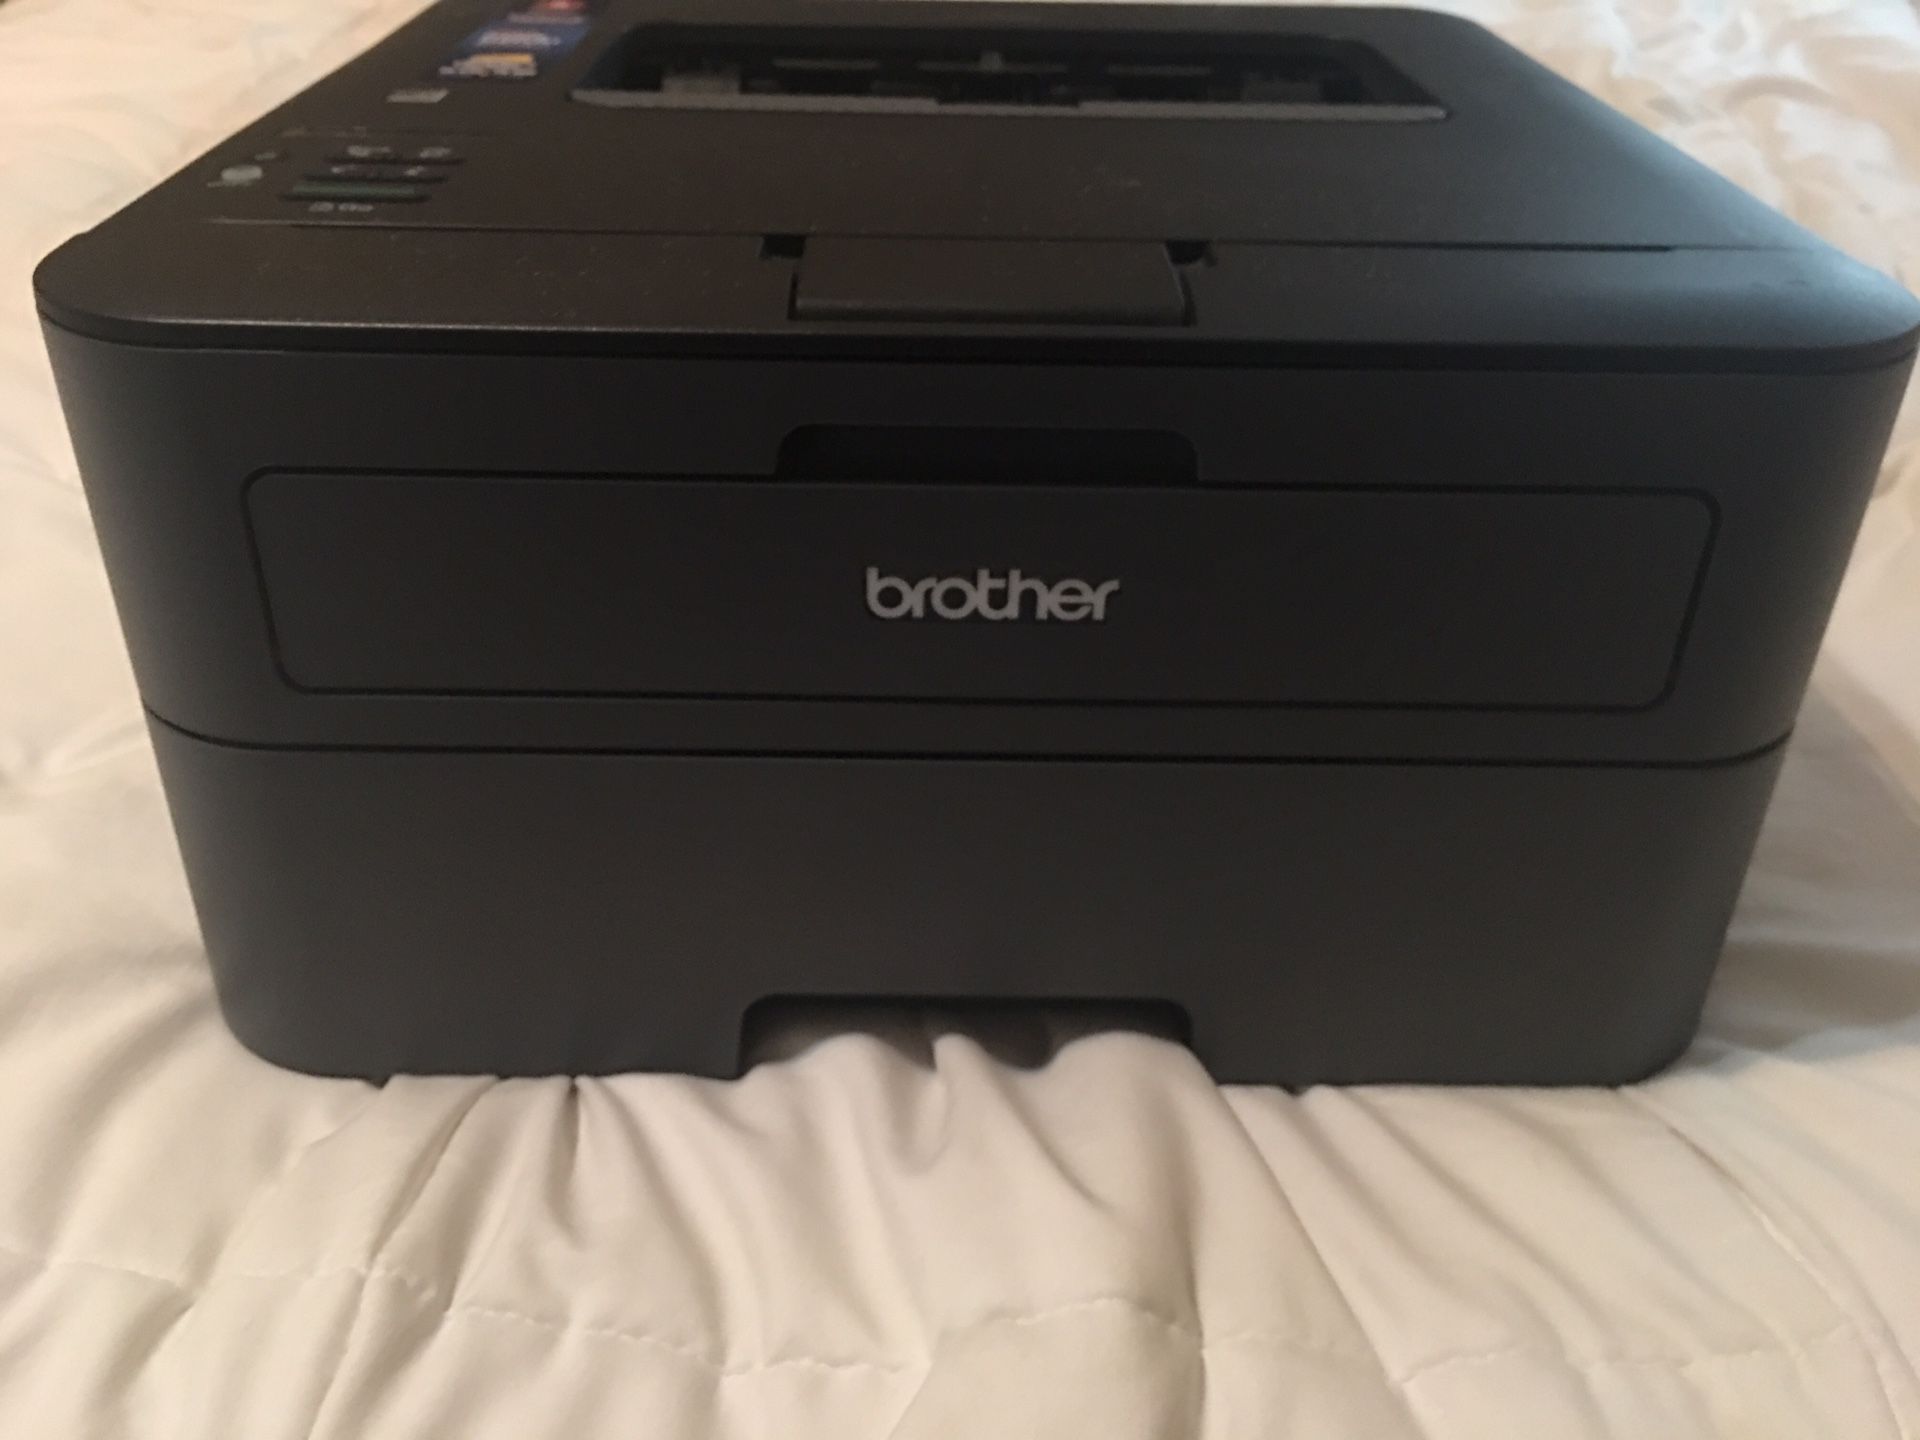 Brother hl2360dw printer